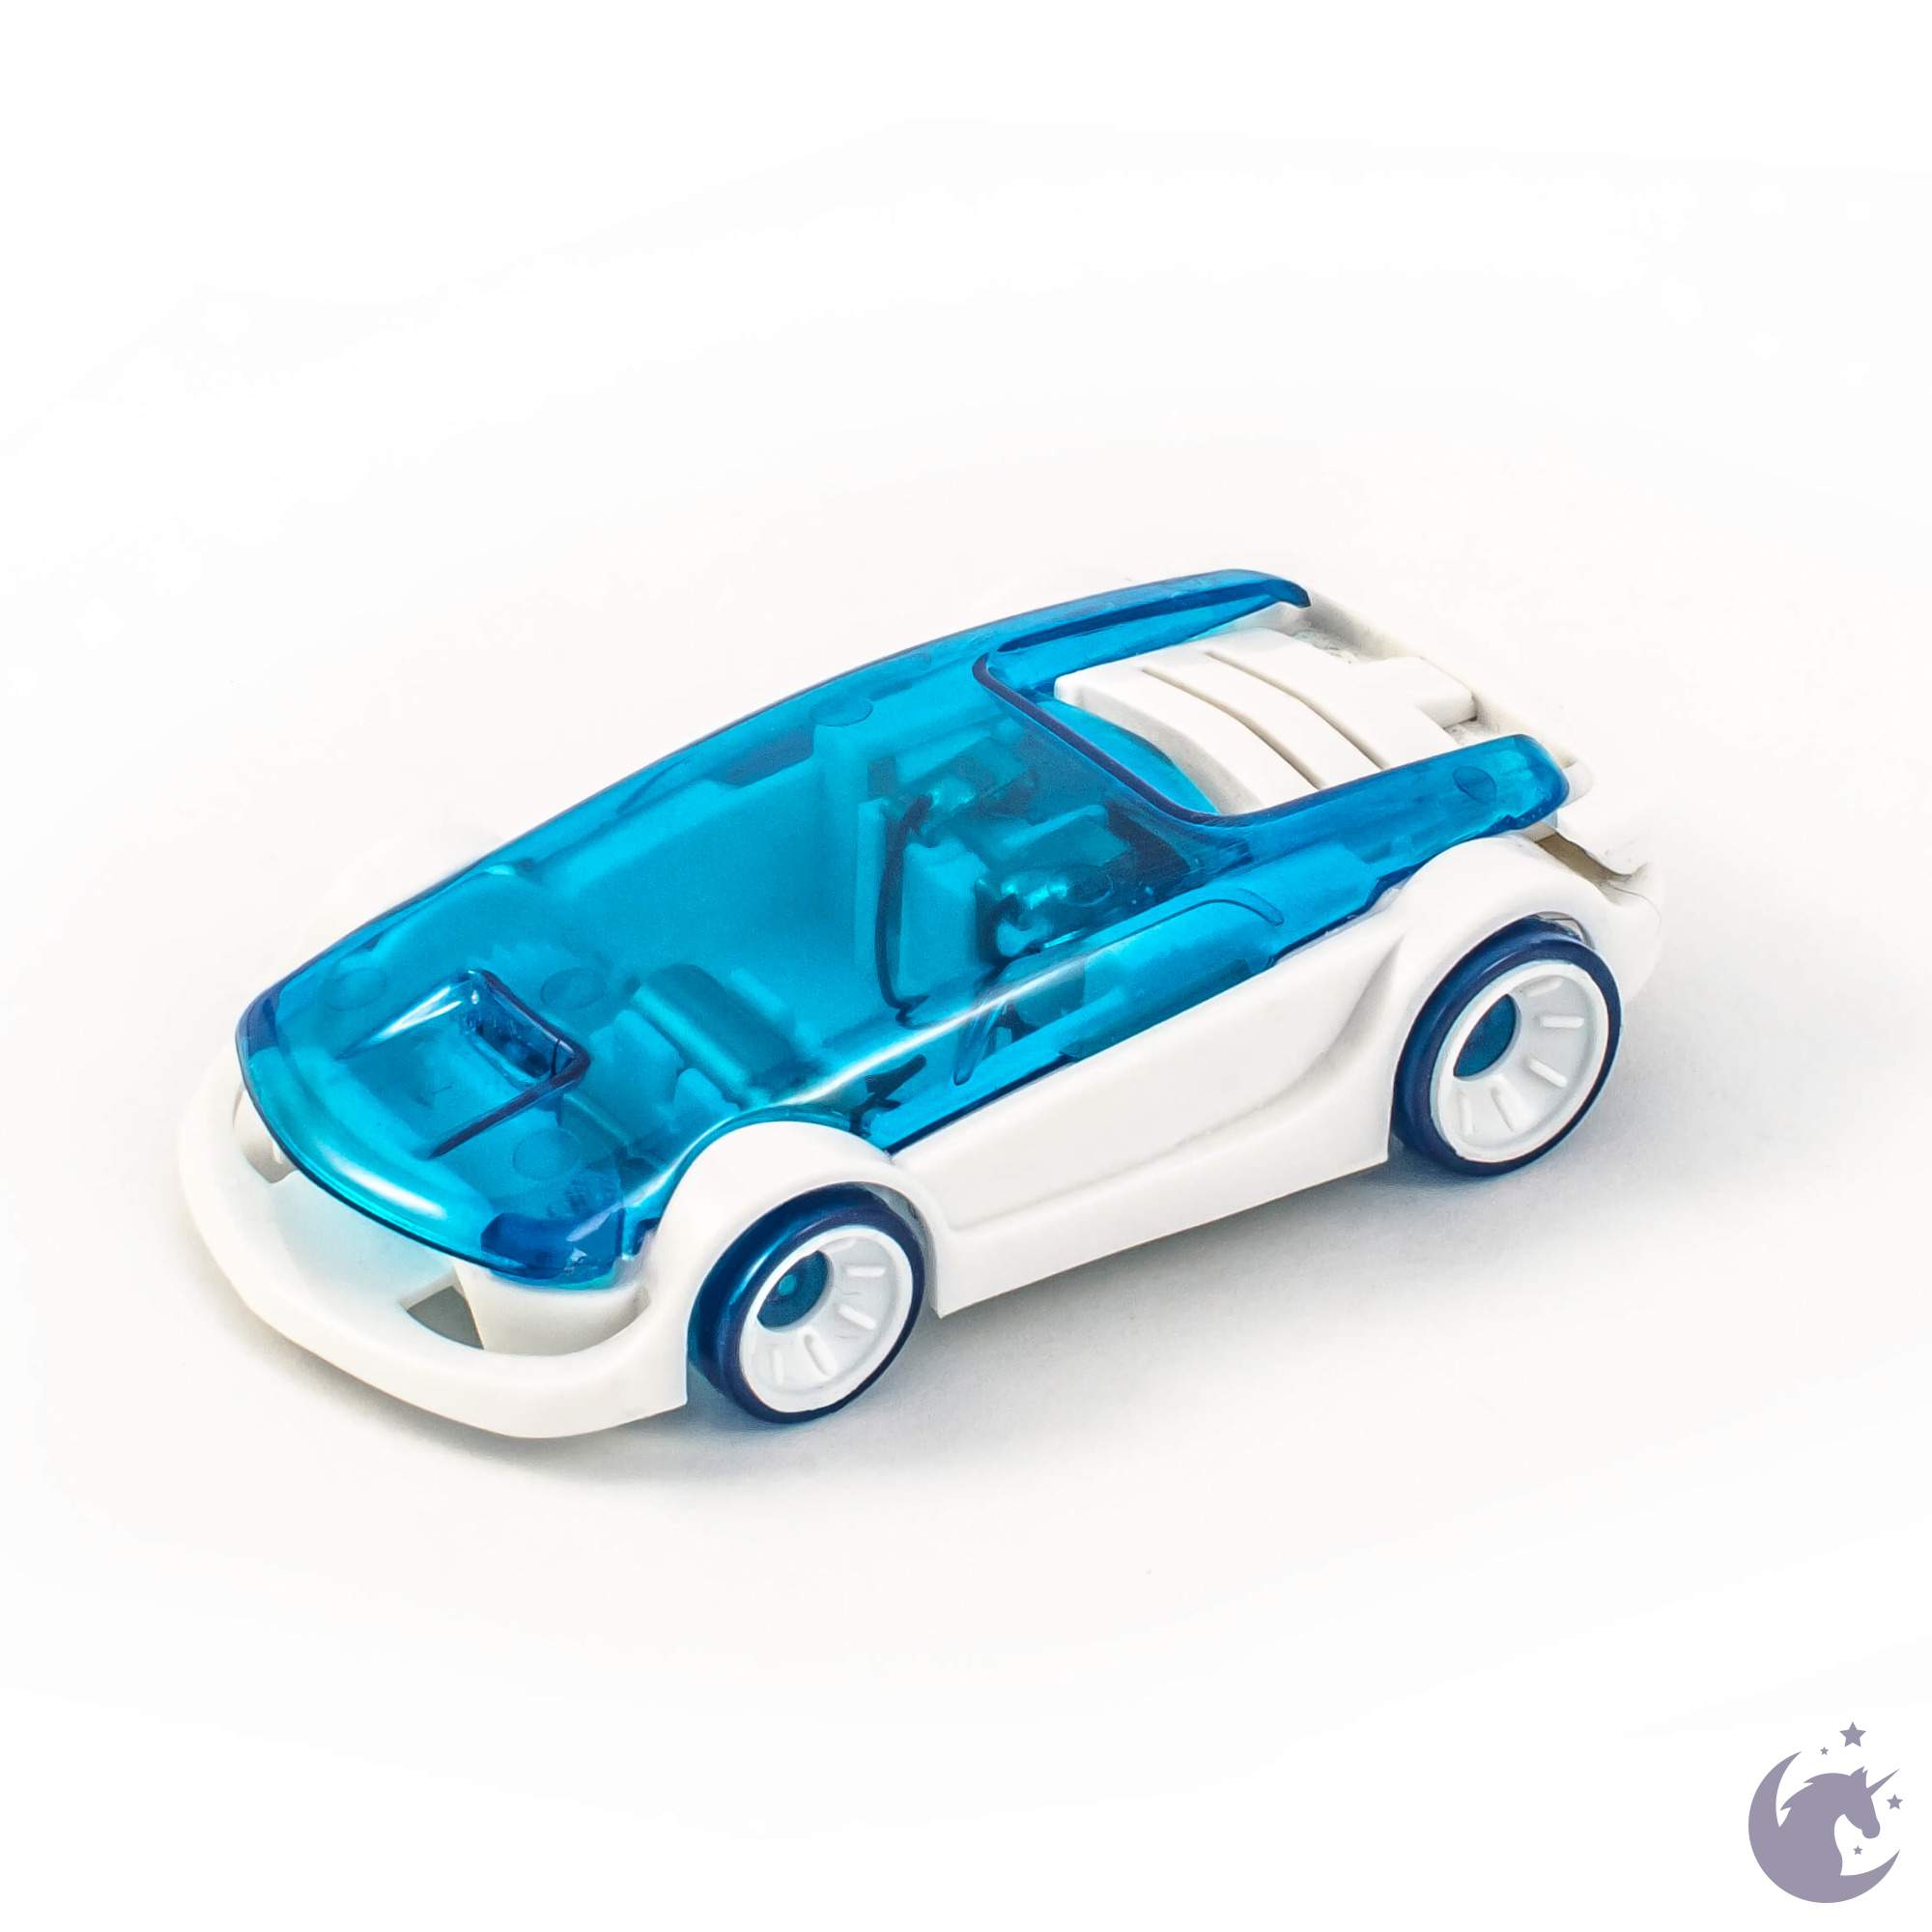 unicorntoys cic kits salt water fuel cell engine car educational robot kit engineering stem toys for kids CIC21-750